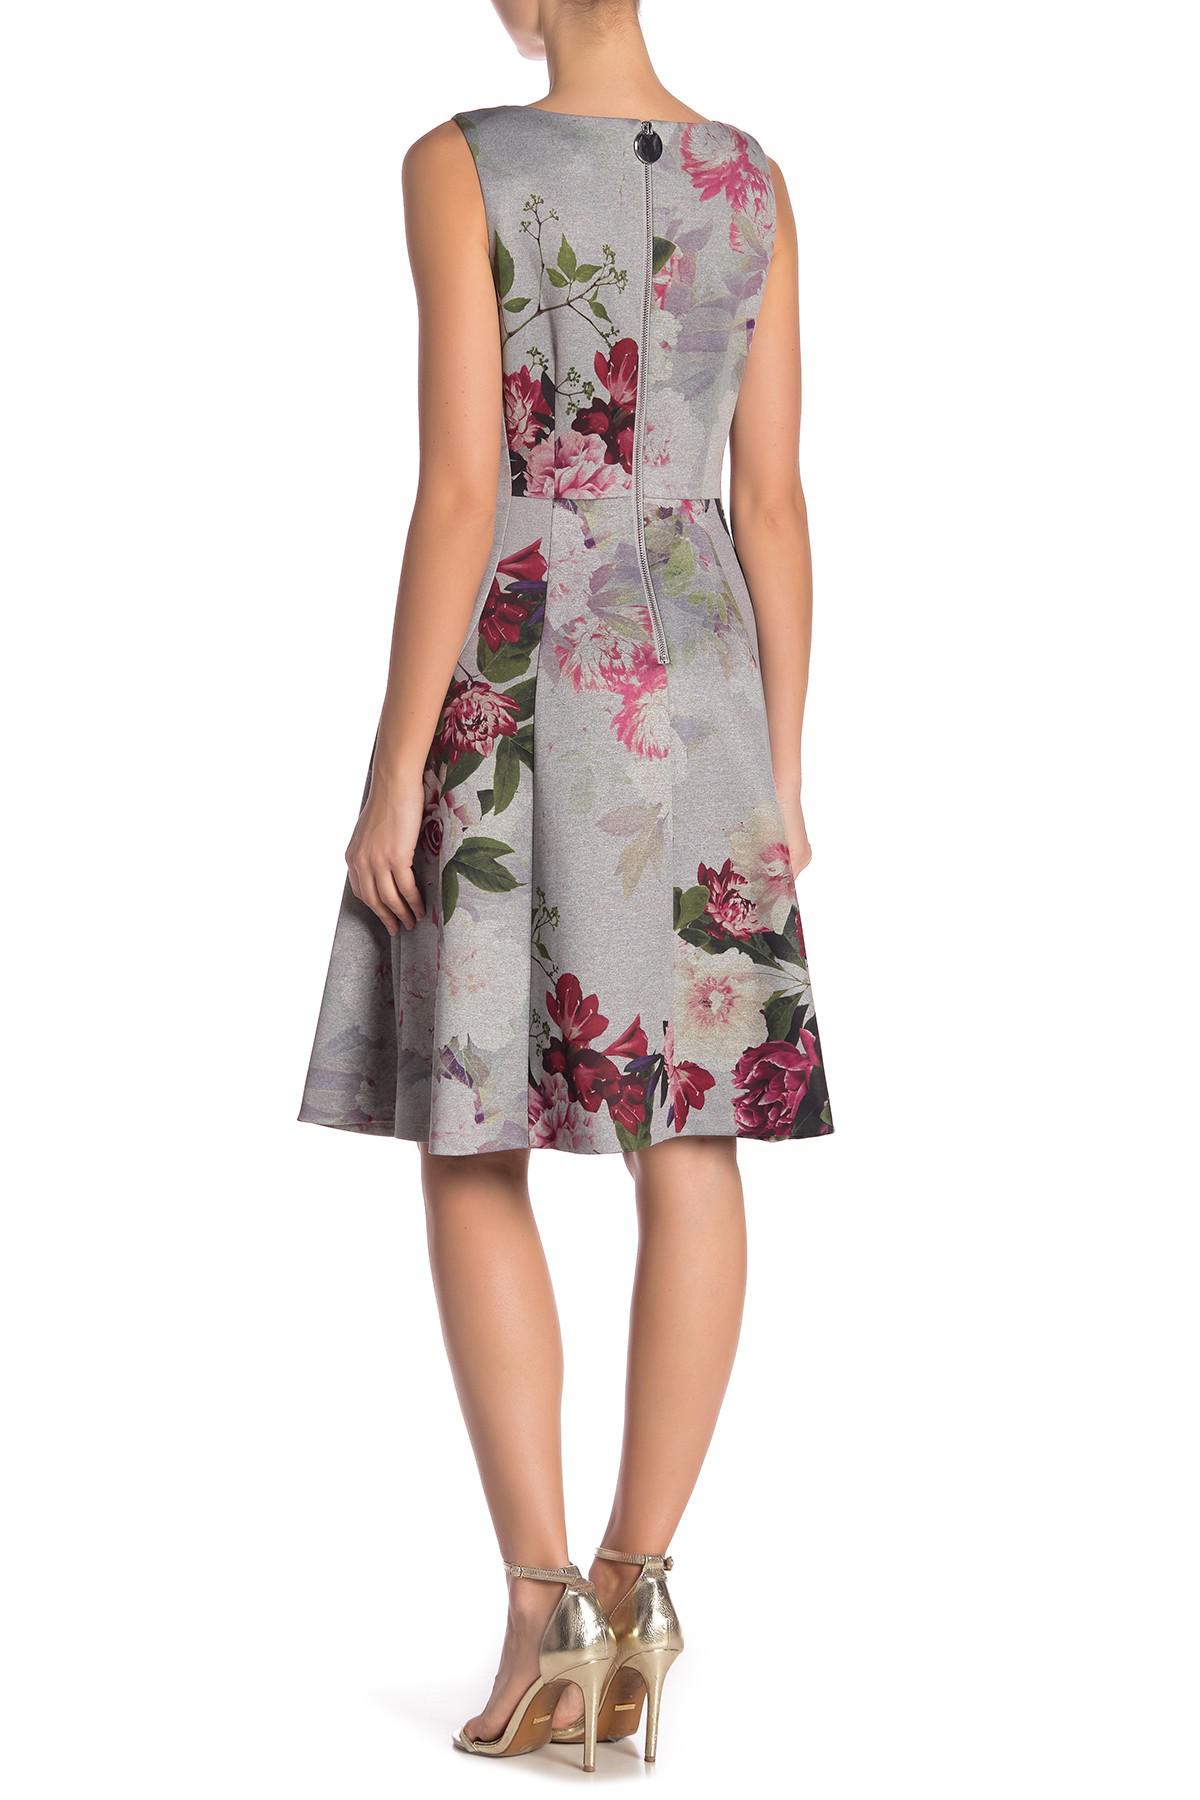 Introducir 39+ imagen calvin klein grey floral dress